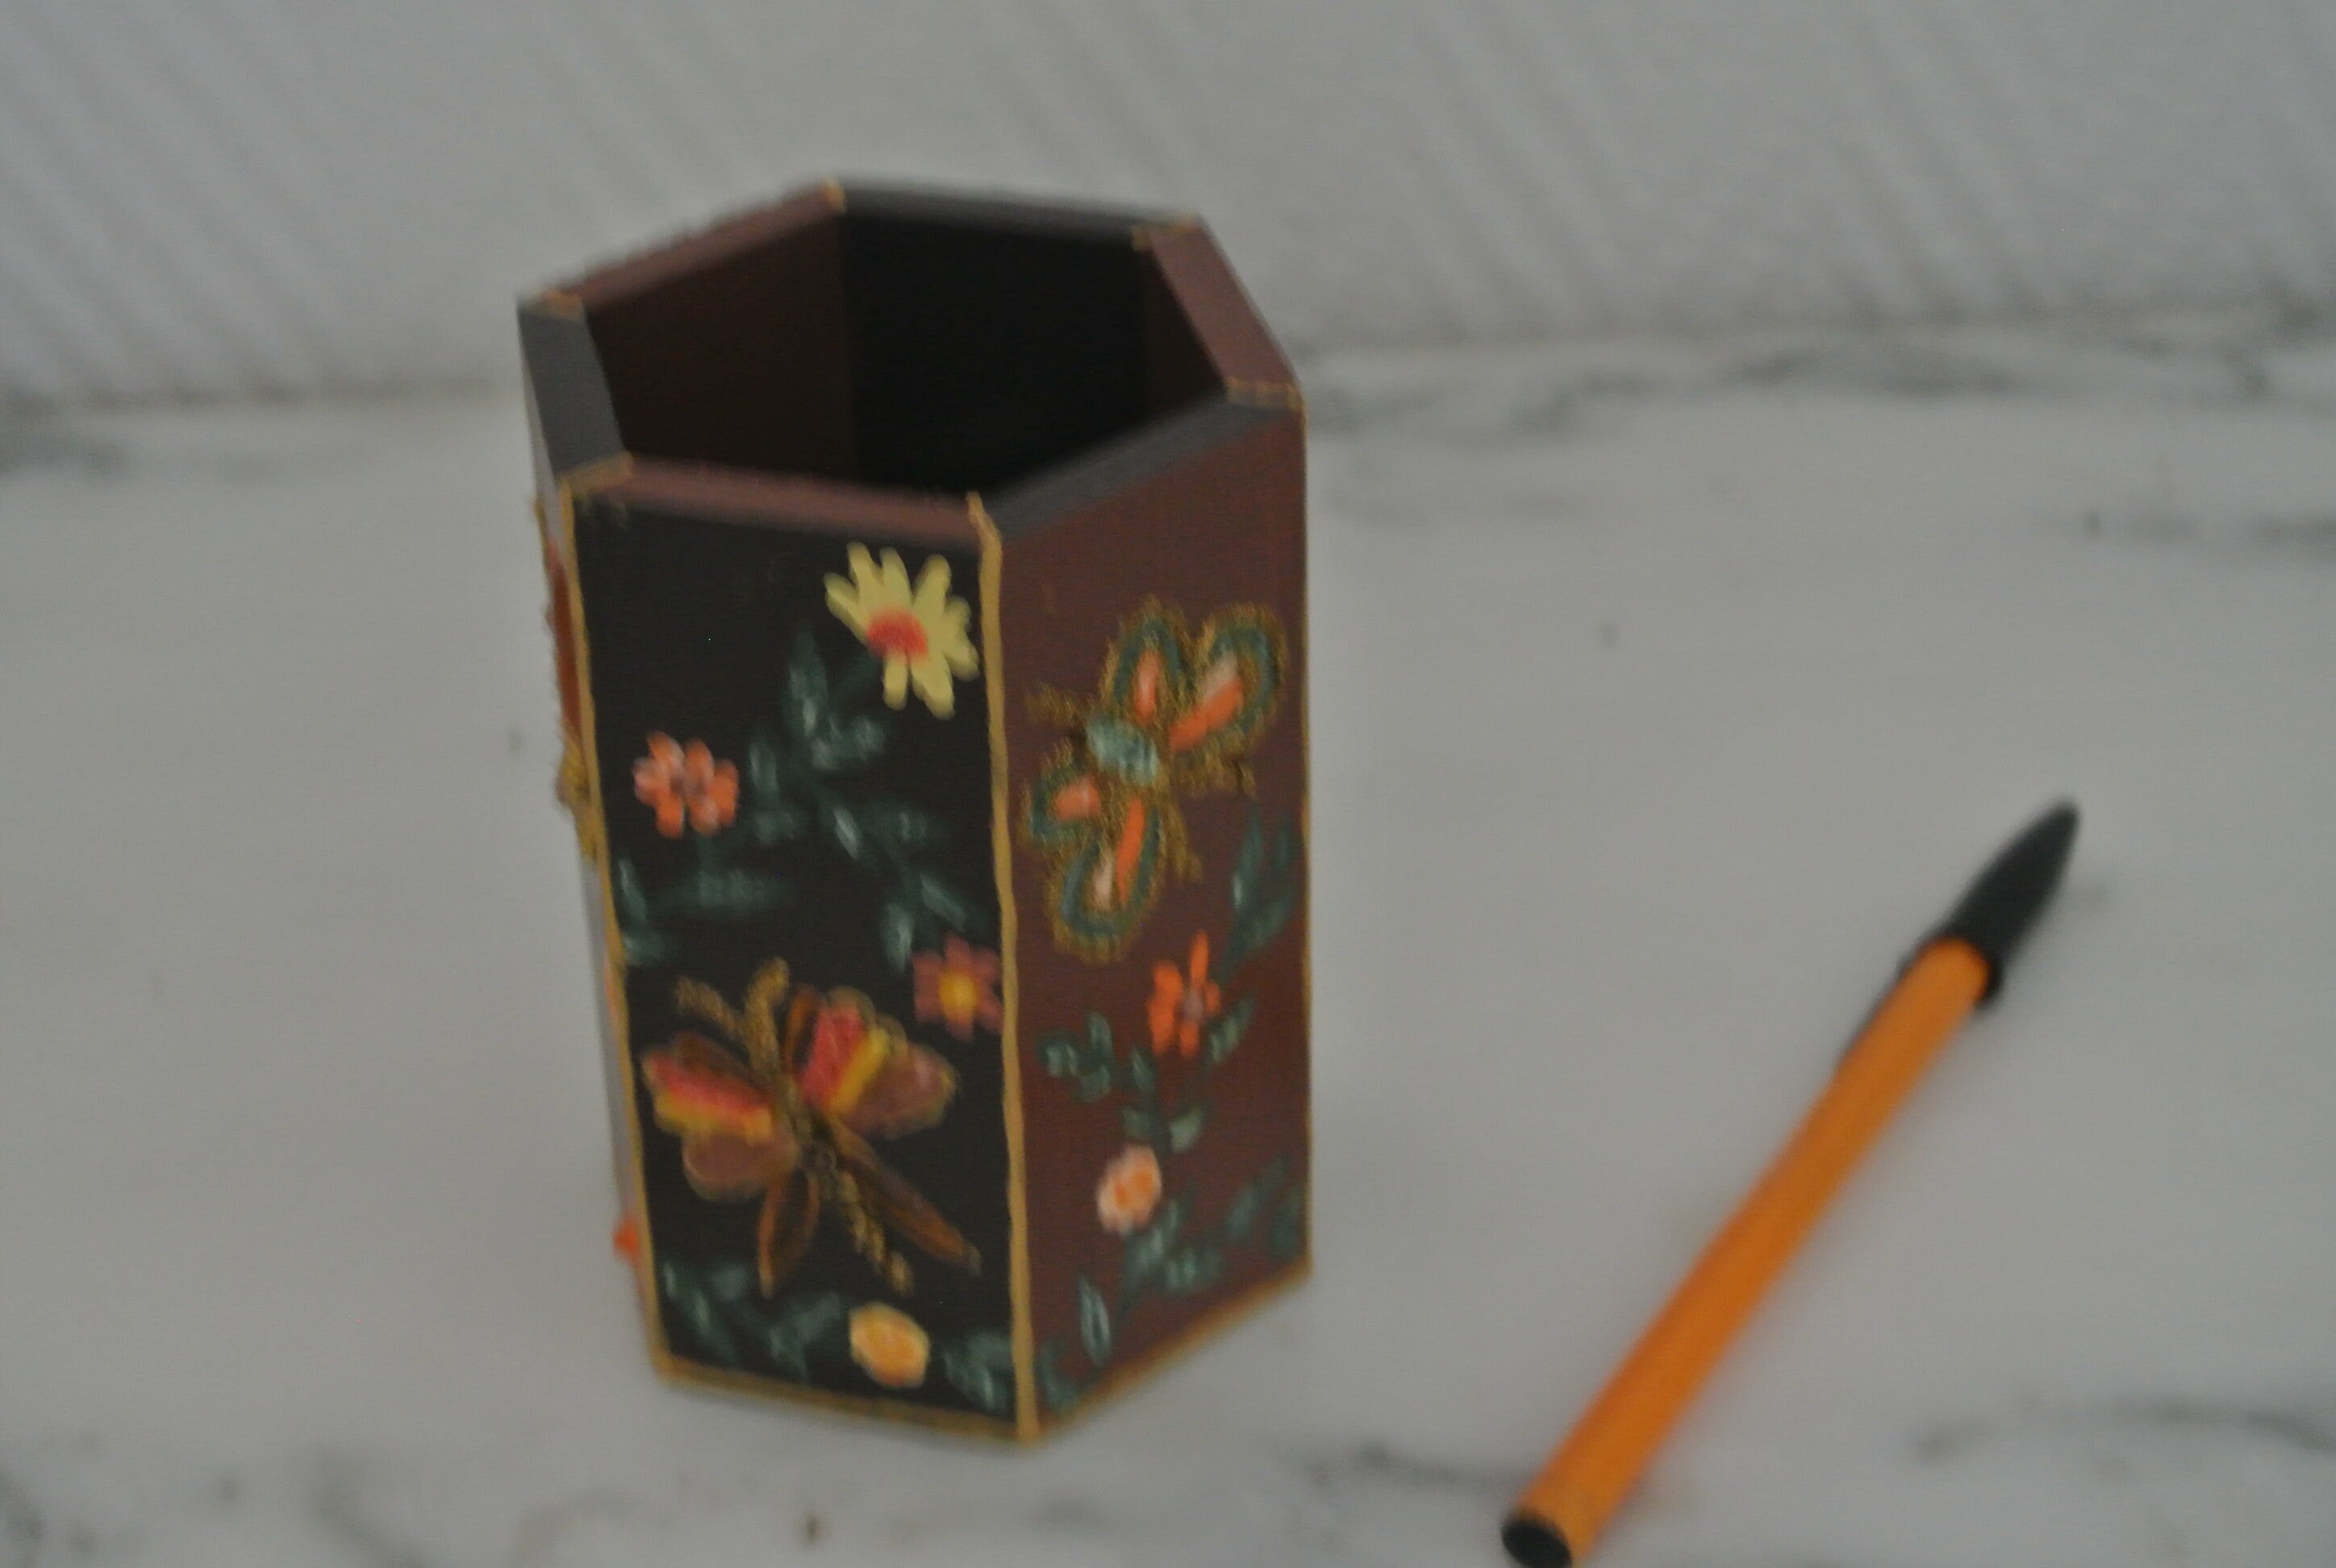 Unfinished Wooden Pencil Holder, College Pencil Case, Wooden Pencil Box,  Wooden Organizer Box, Wood Pencil Holder 